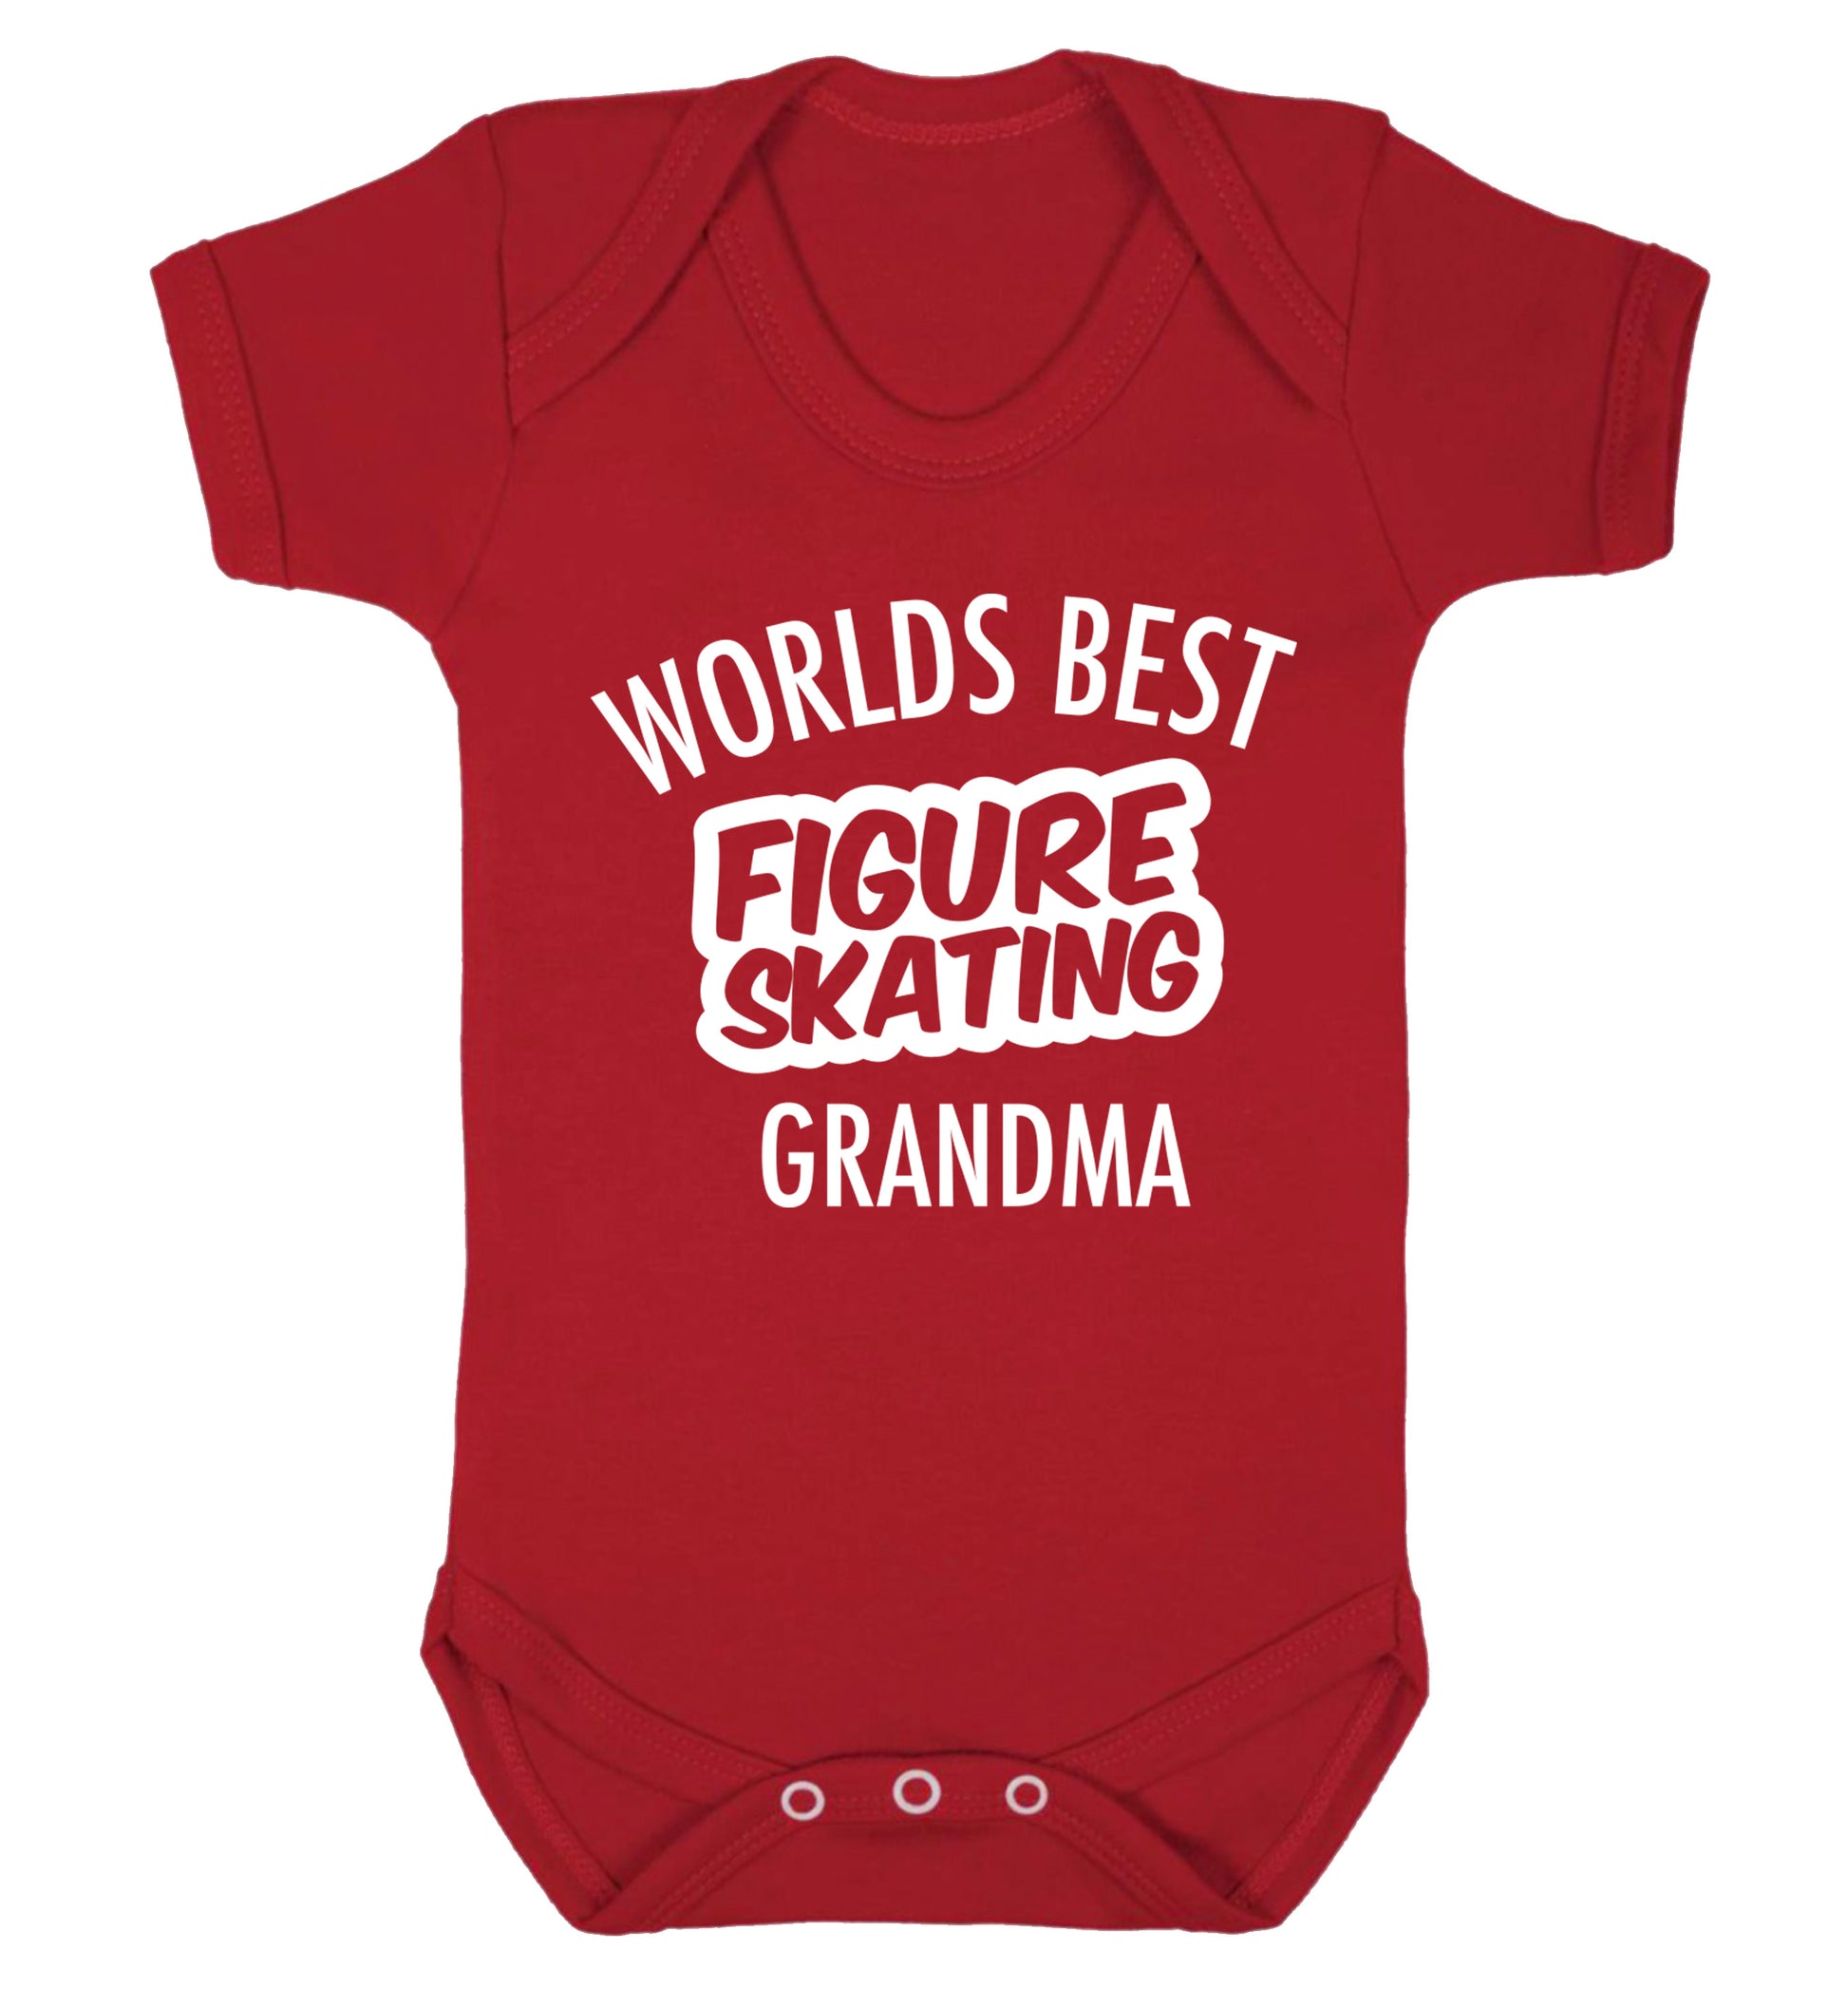 Worlds best figure skating grandma Baby Vest red 18-24 months